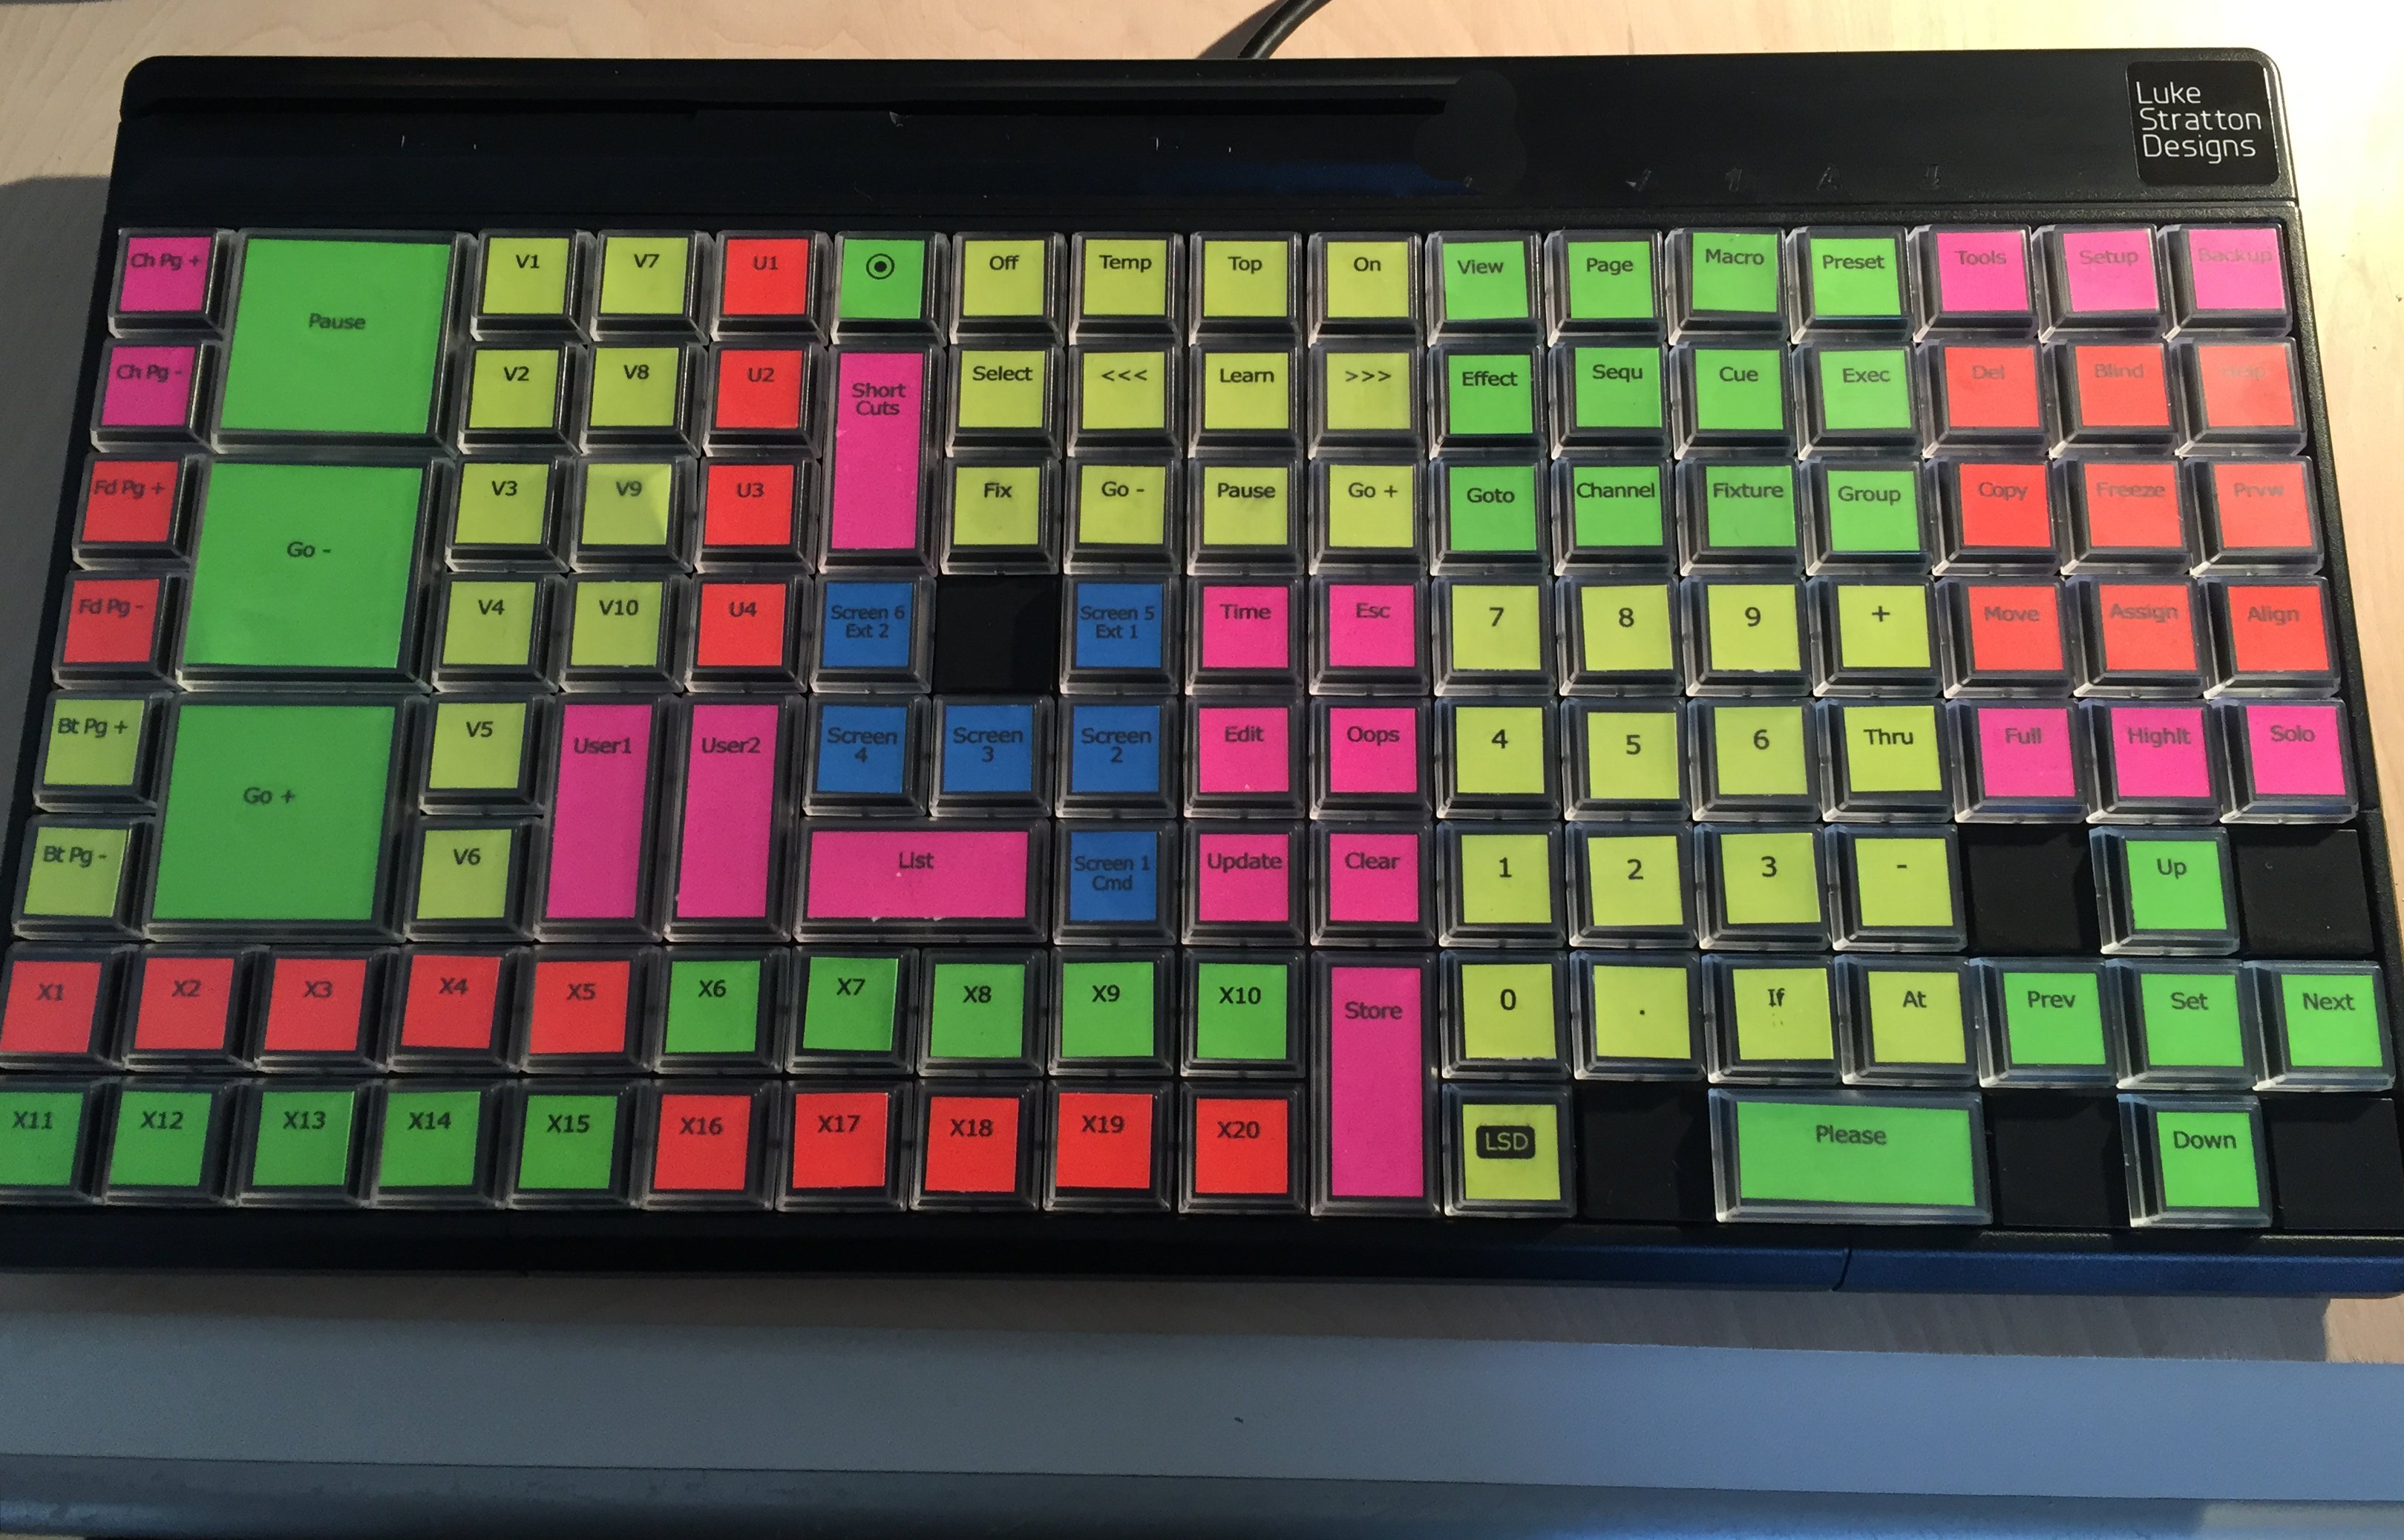 Command Keyboard for grandMA2 onPC - Luke Stratton Designs